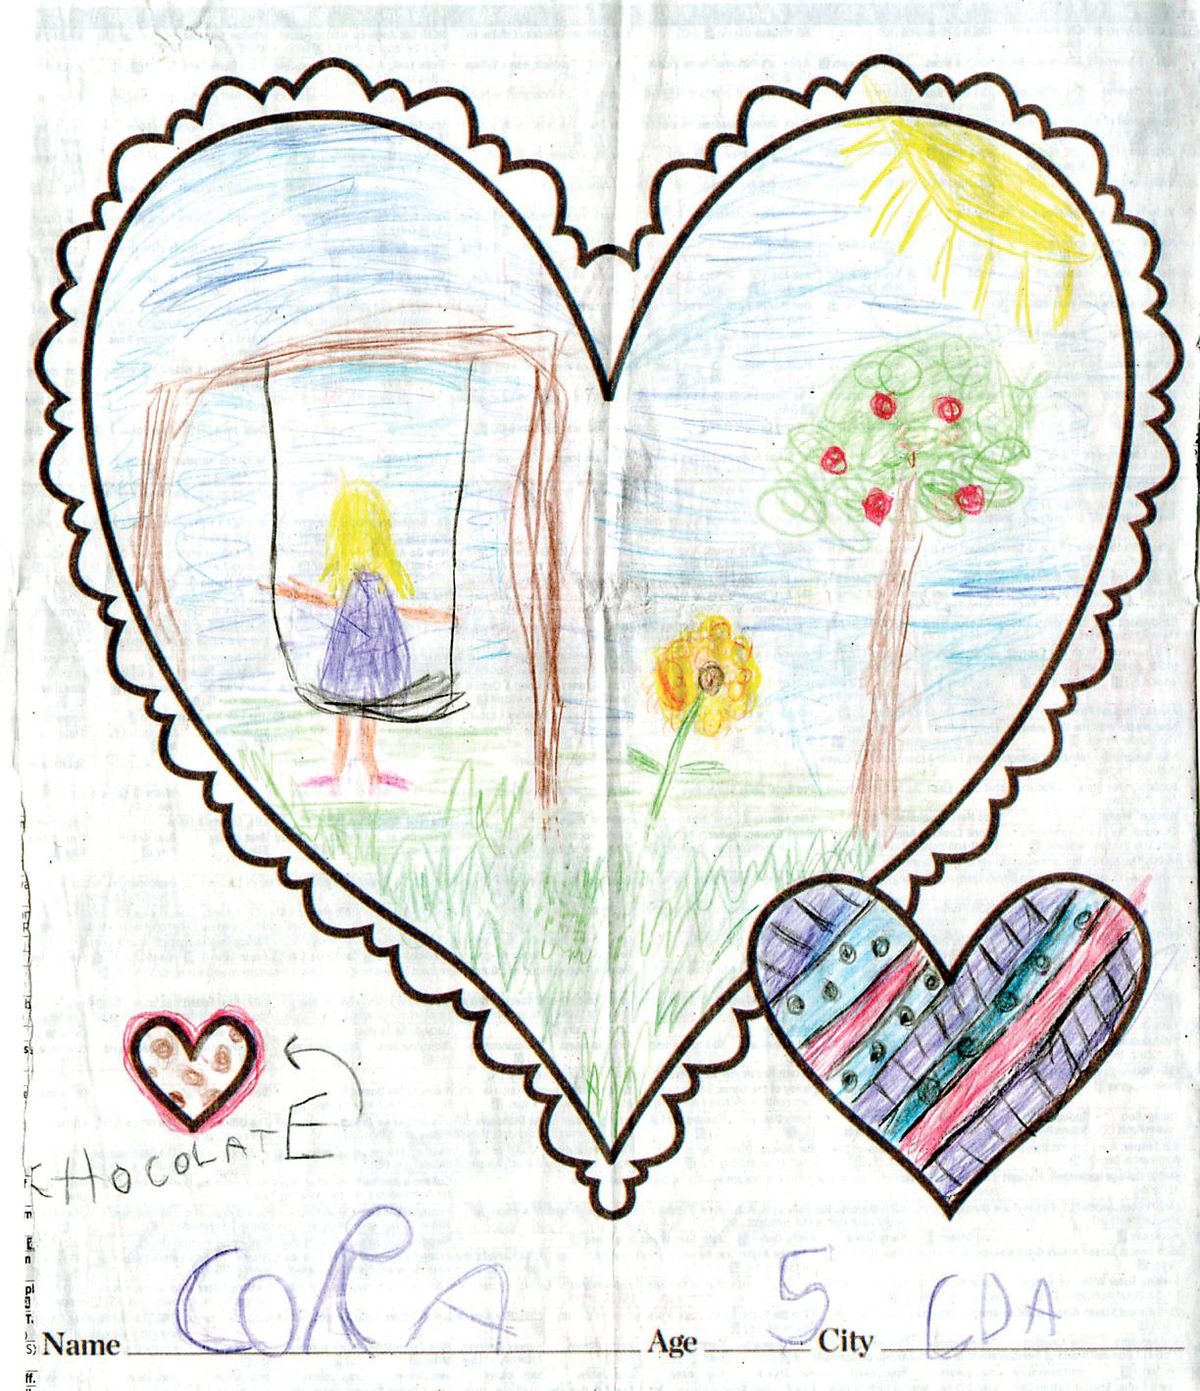 Cora Lepire, age 5, Coeur d’Alene